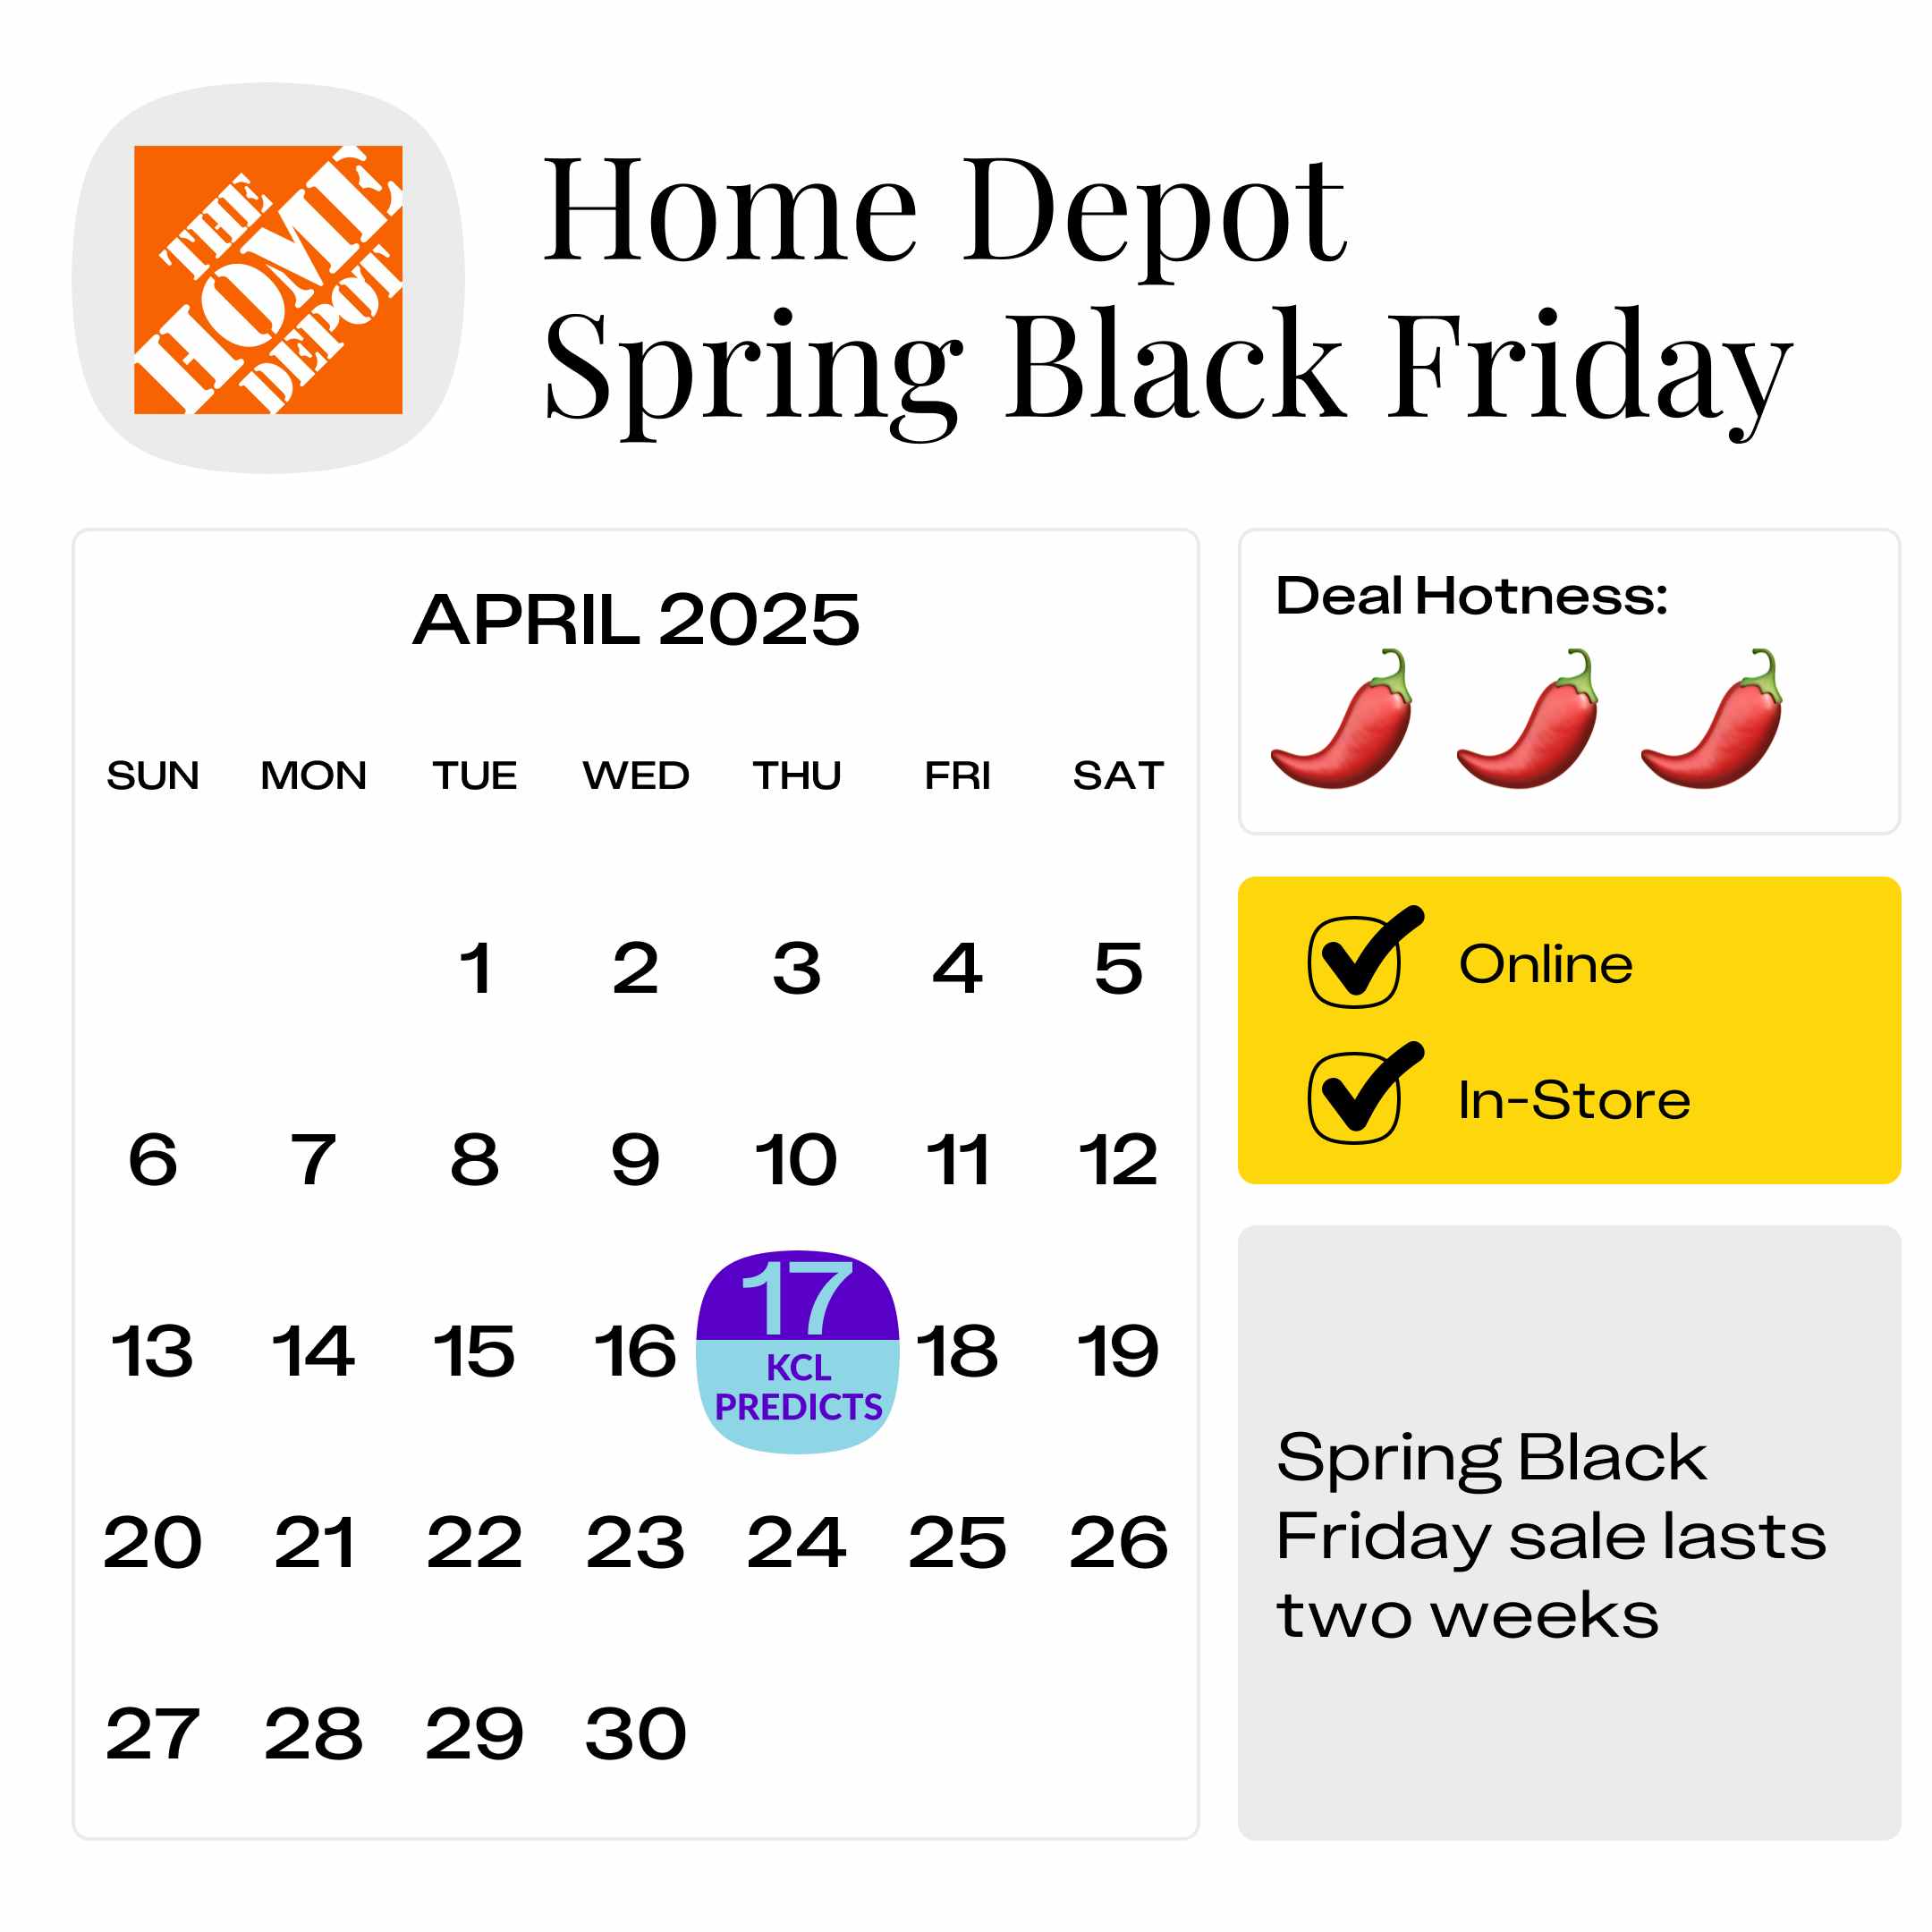 Home-Depot-Spring-Black-Friday-2025-predicted